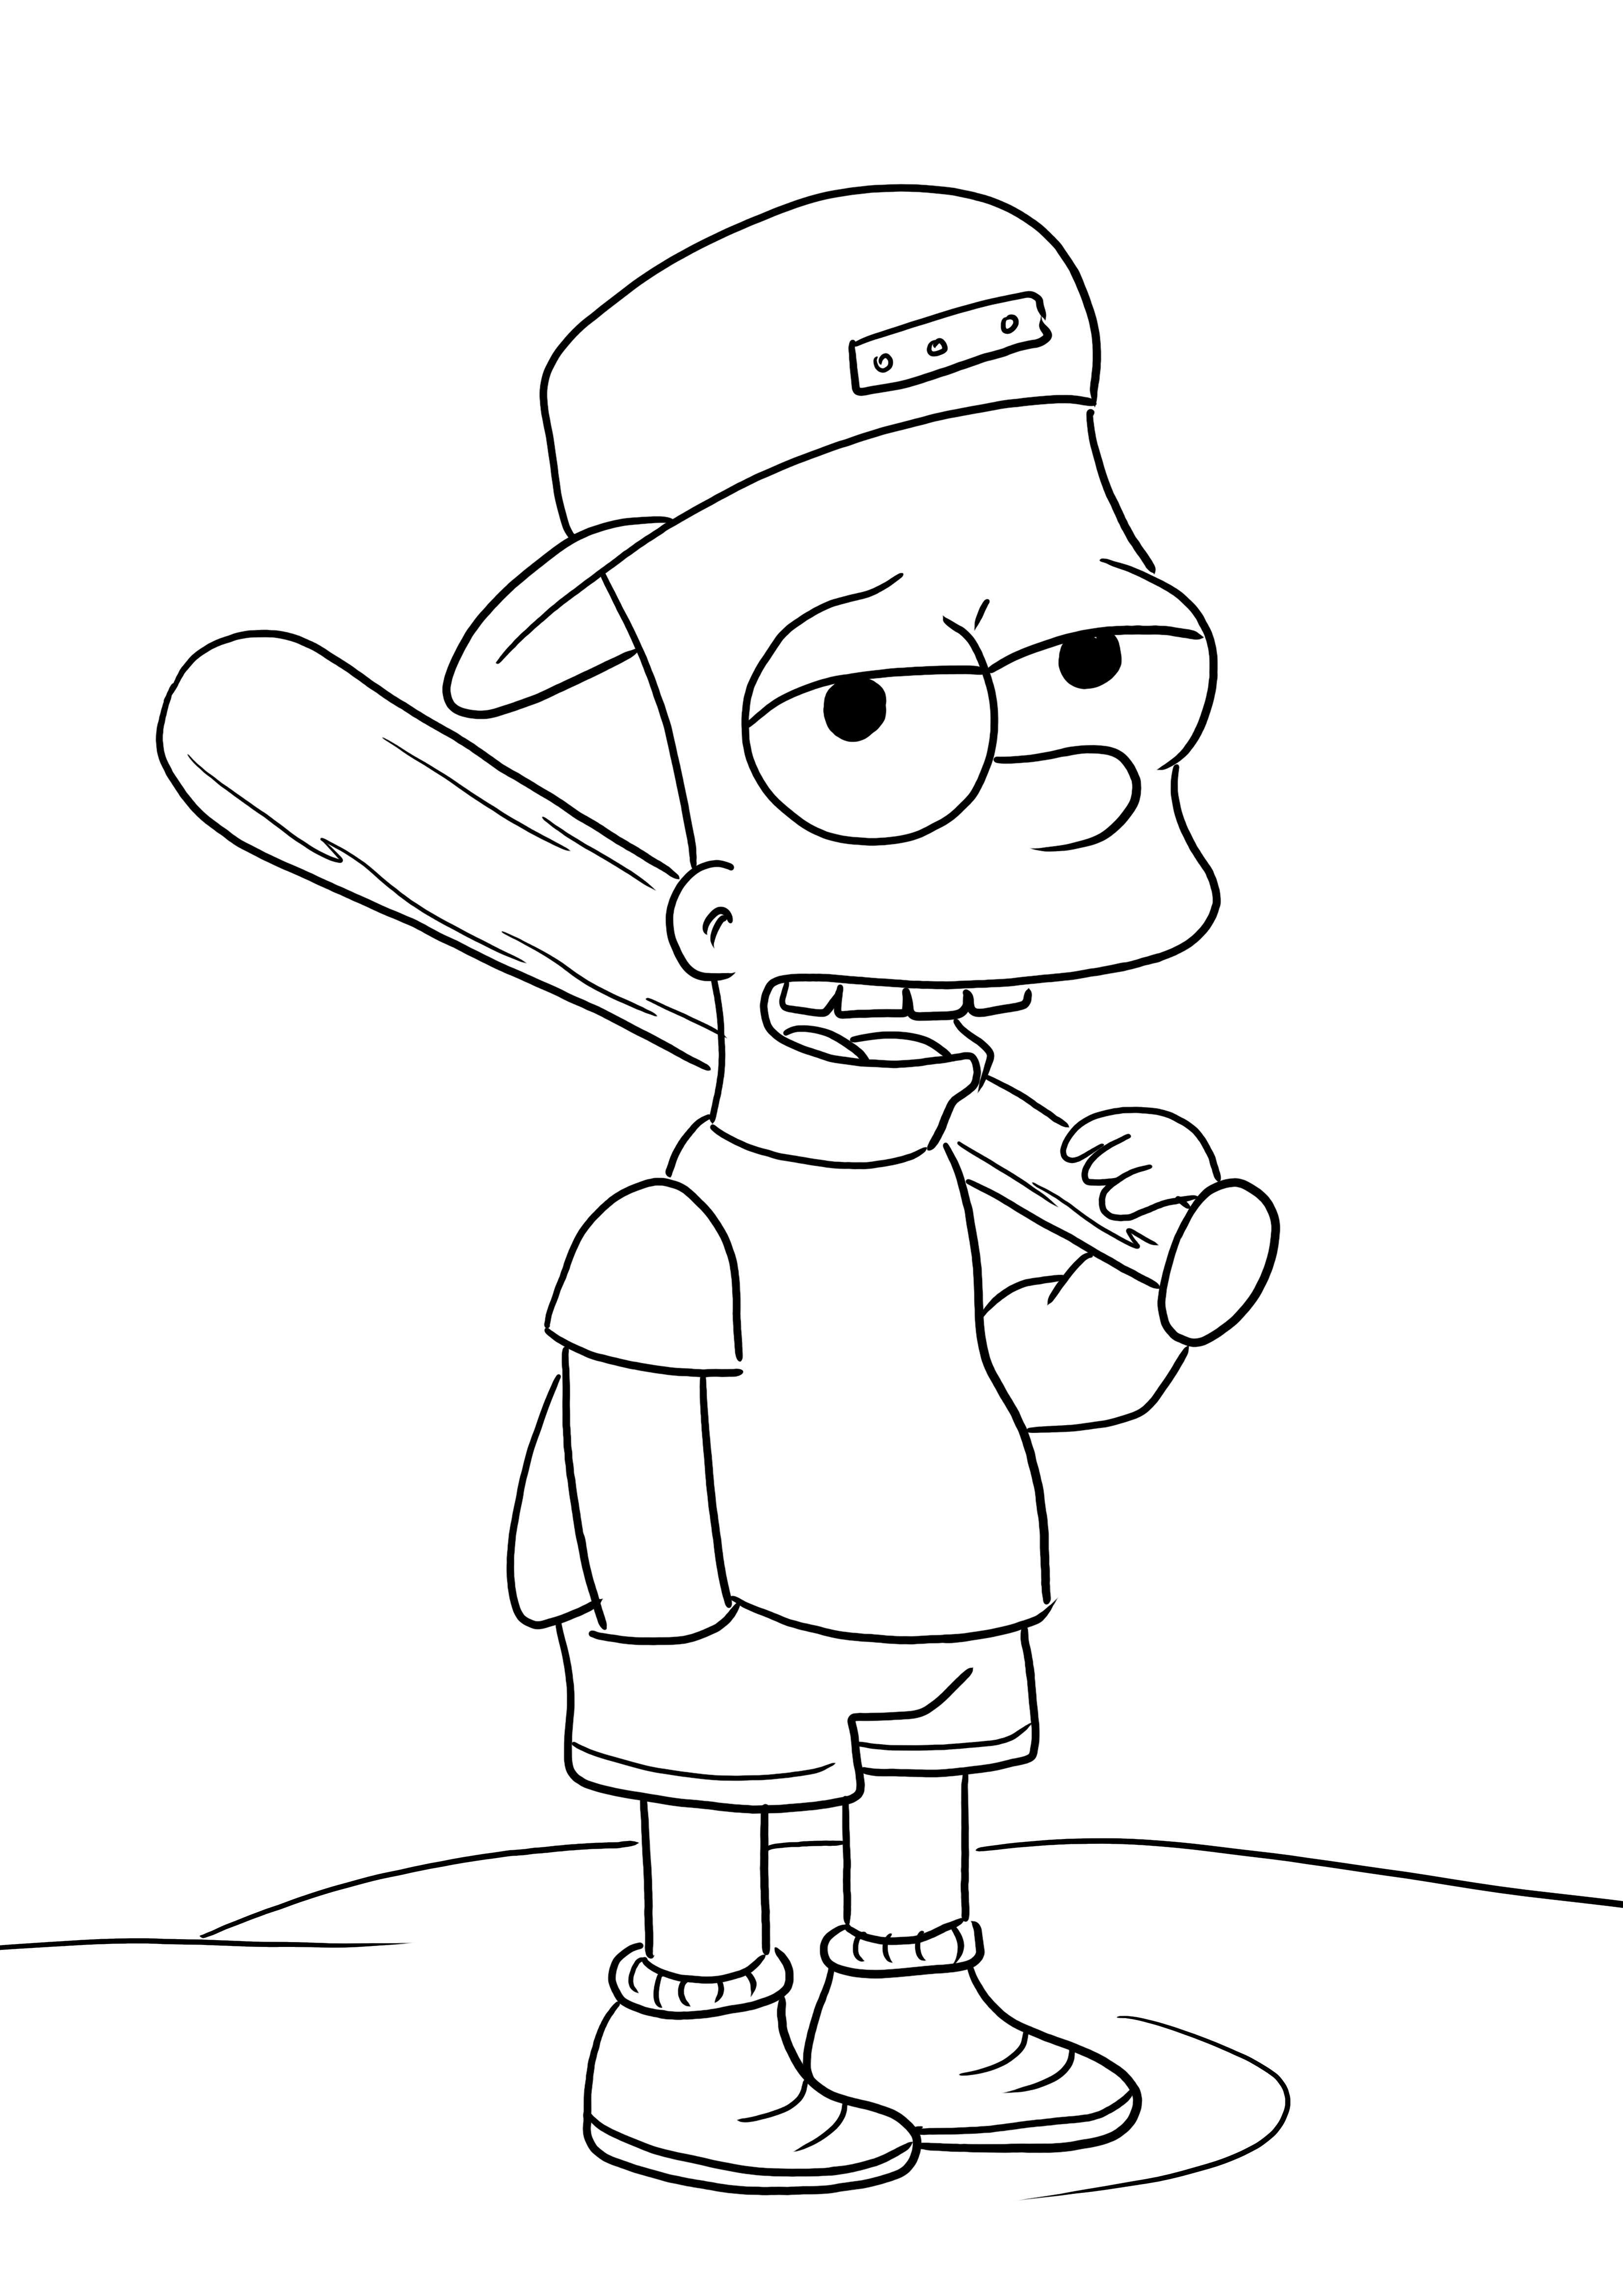 Bart Simpsons e la sua mazza da baseball o stampa e color free